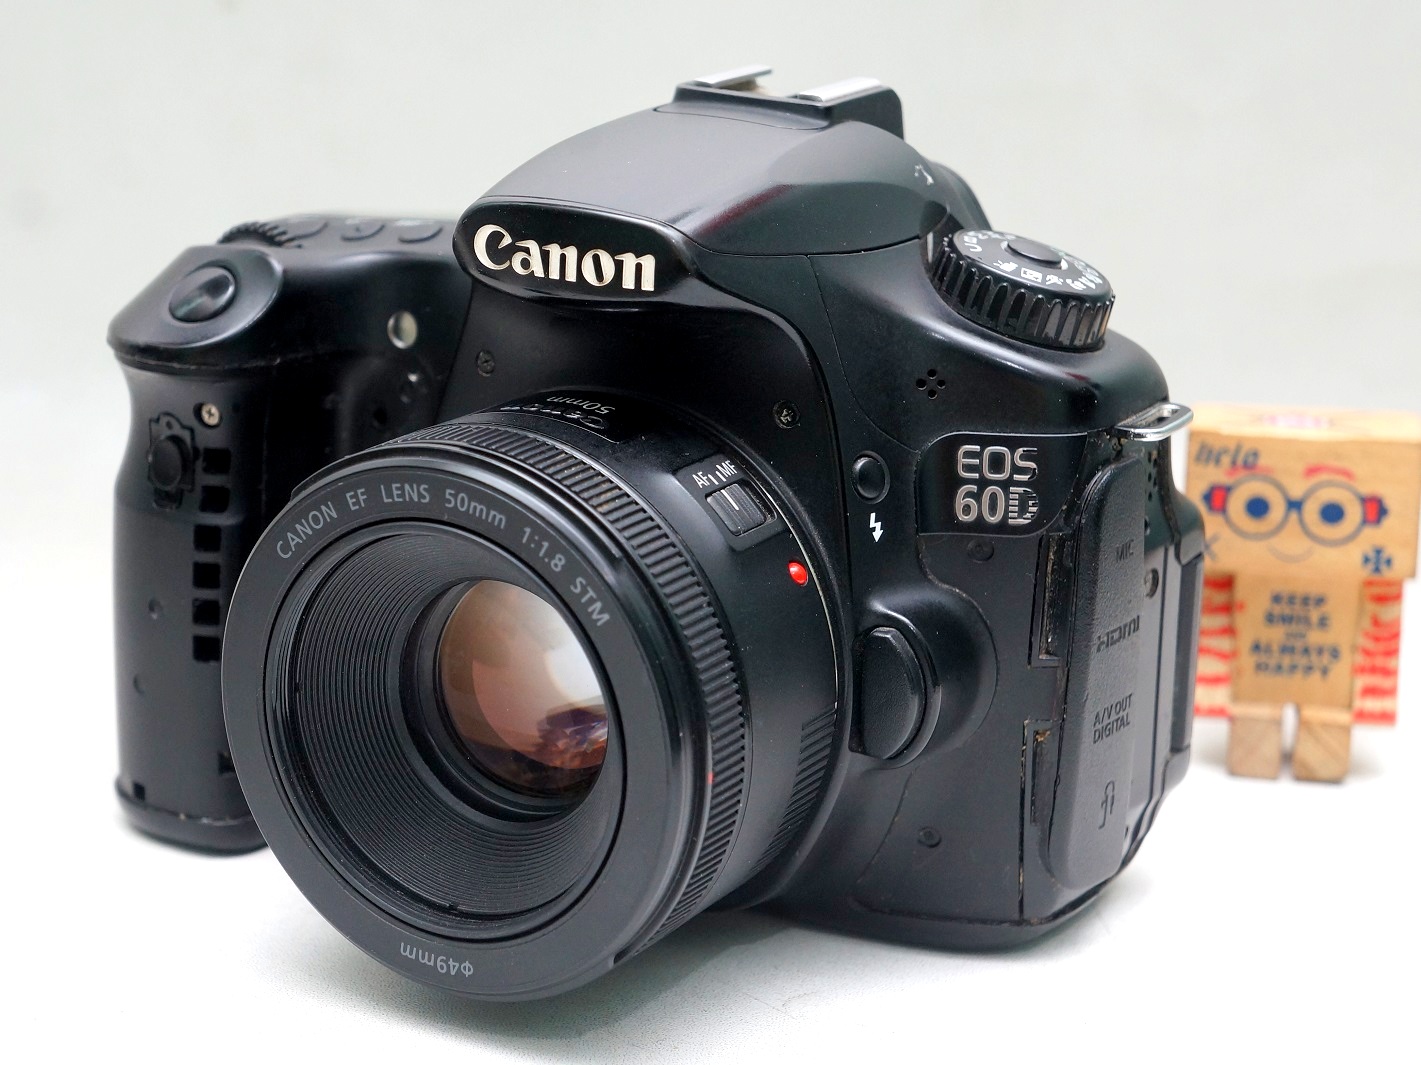 Jual Canon EOS 60D DSLR bekas | Jual Beli Laptop Second dan Kamera